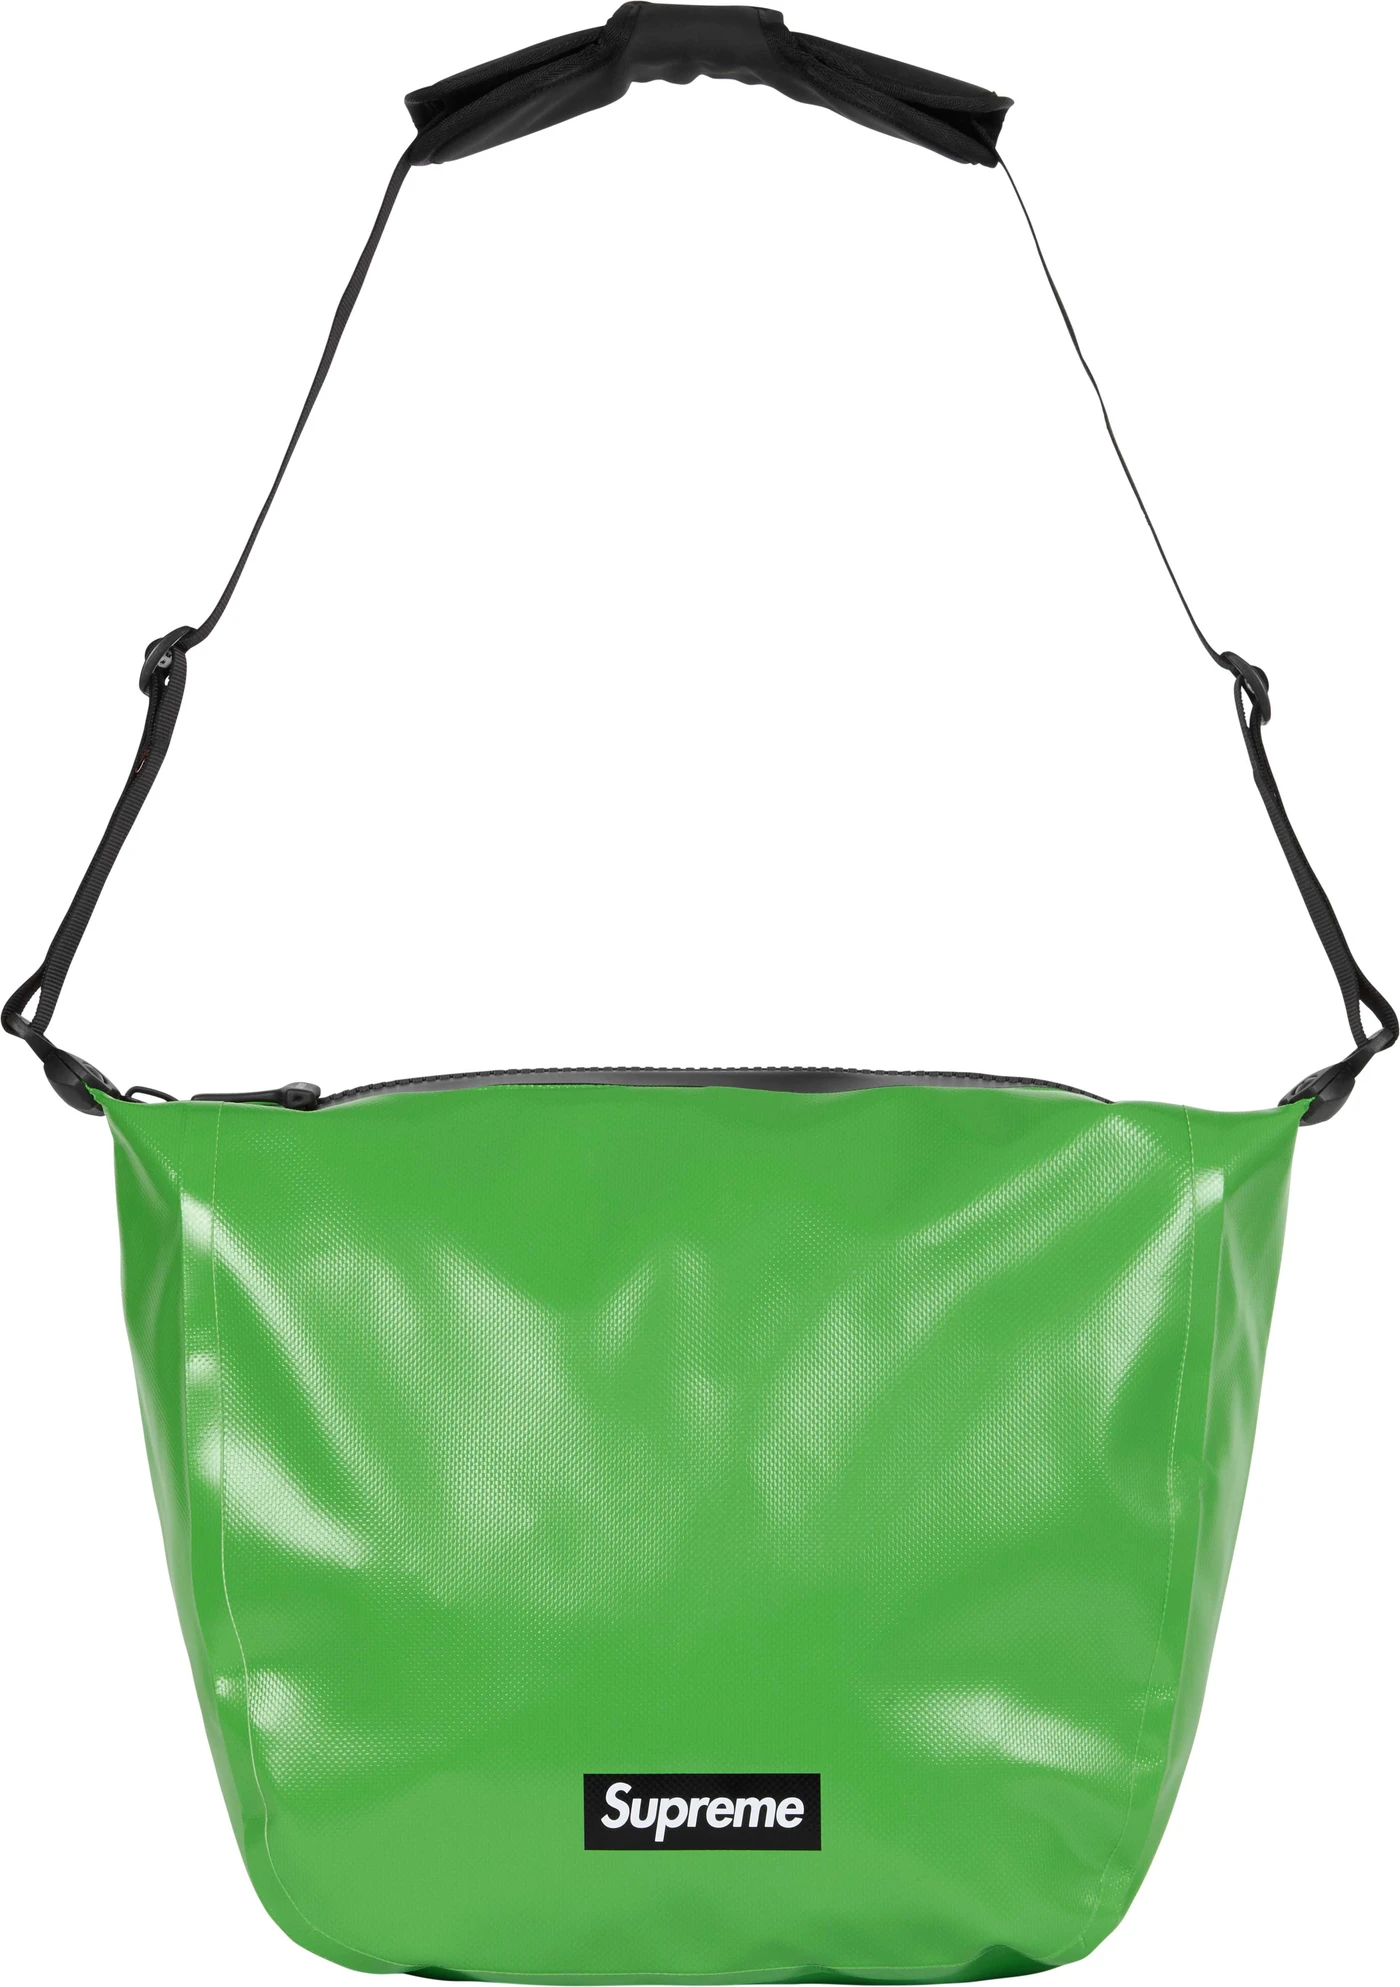 Ortlieb Small Messenger Bag ドイツの鞄メーカー 人気大割引 - バッグ